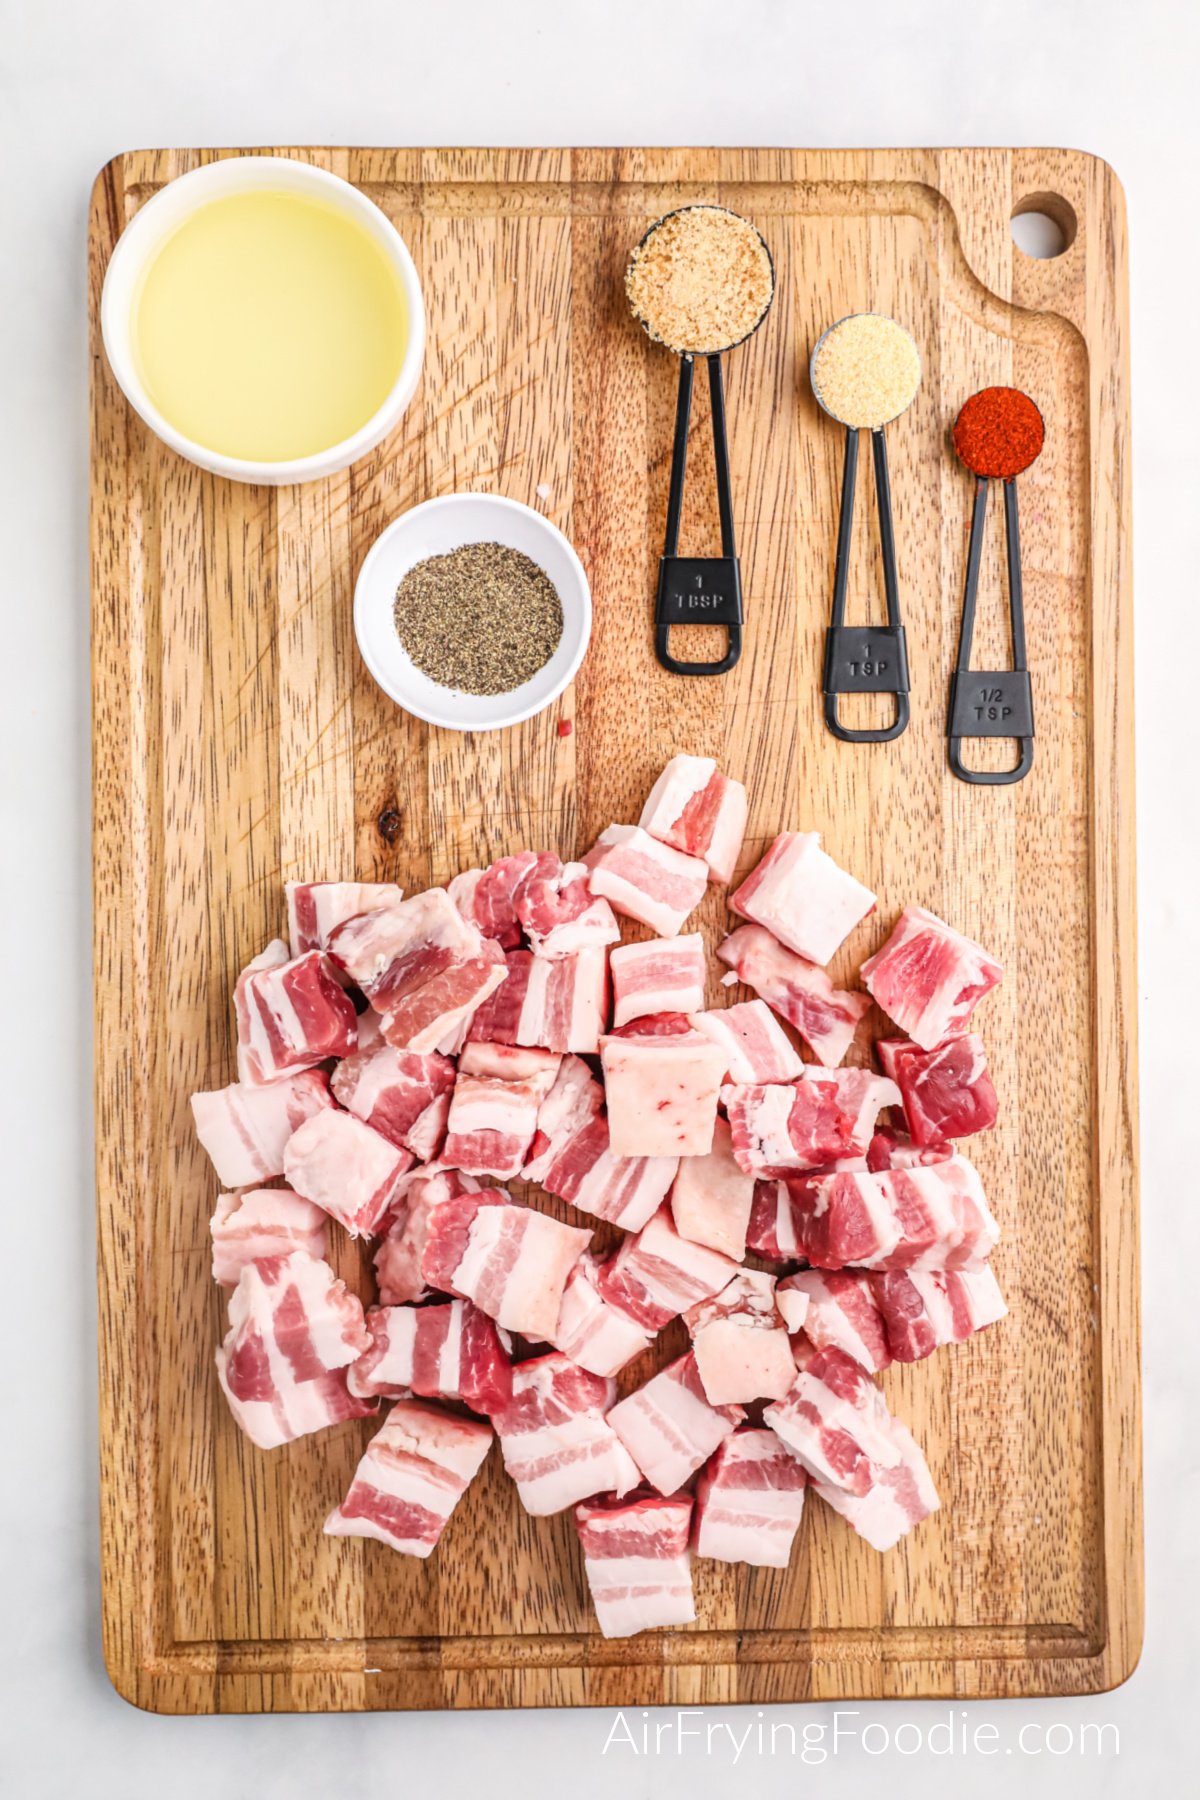 Ingredients needed to make pork belly bites in the air fryer.